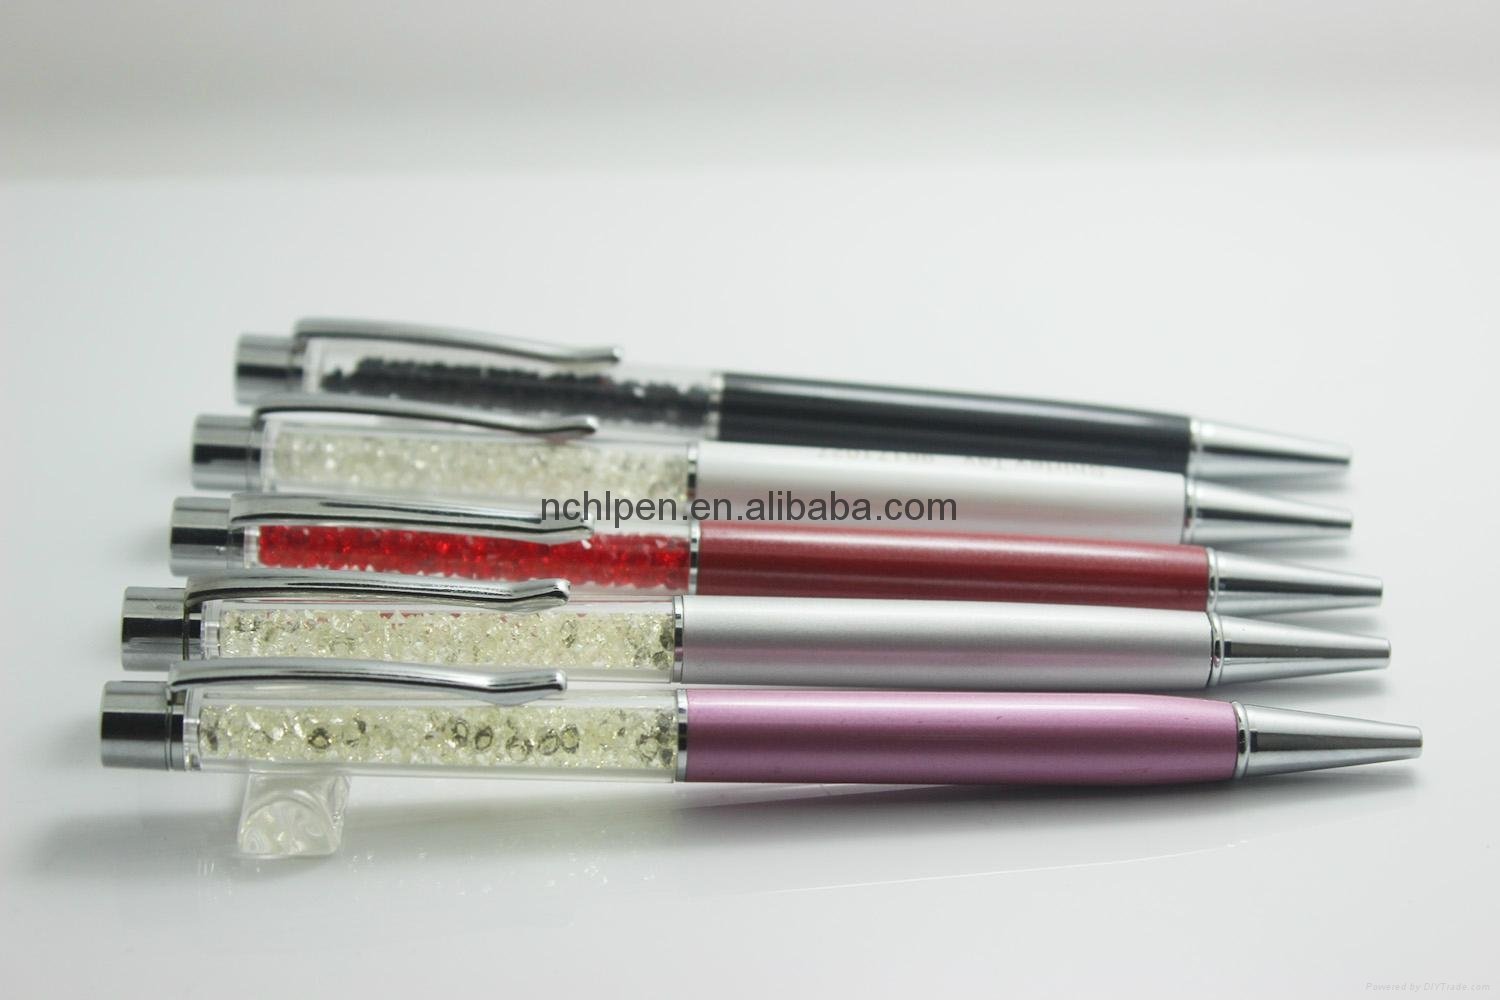 Manufacturing Twist Bling Stylus Pen Promotional Metal crystal Ball Pen 2